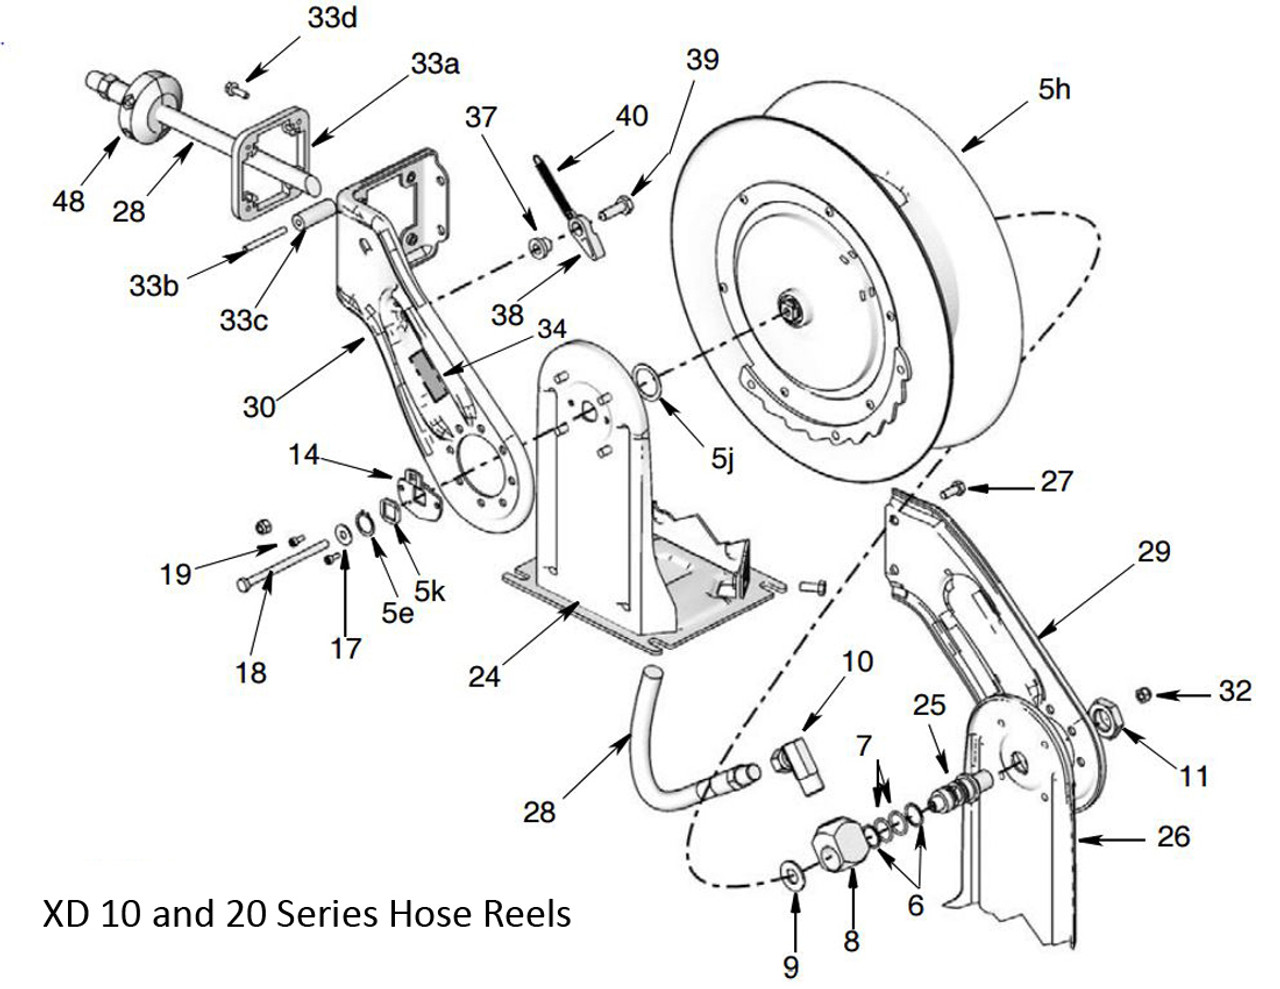 Graco XD 10 Air/Water Hose Reel Spool Repair Kit For HSL33B - John M.  Ellsworth Co. Inc.